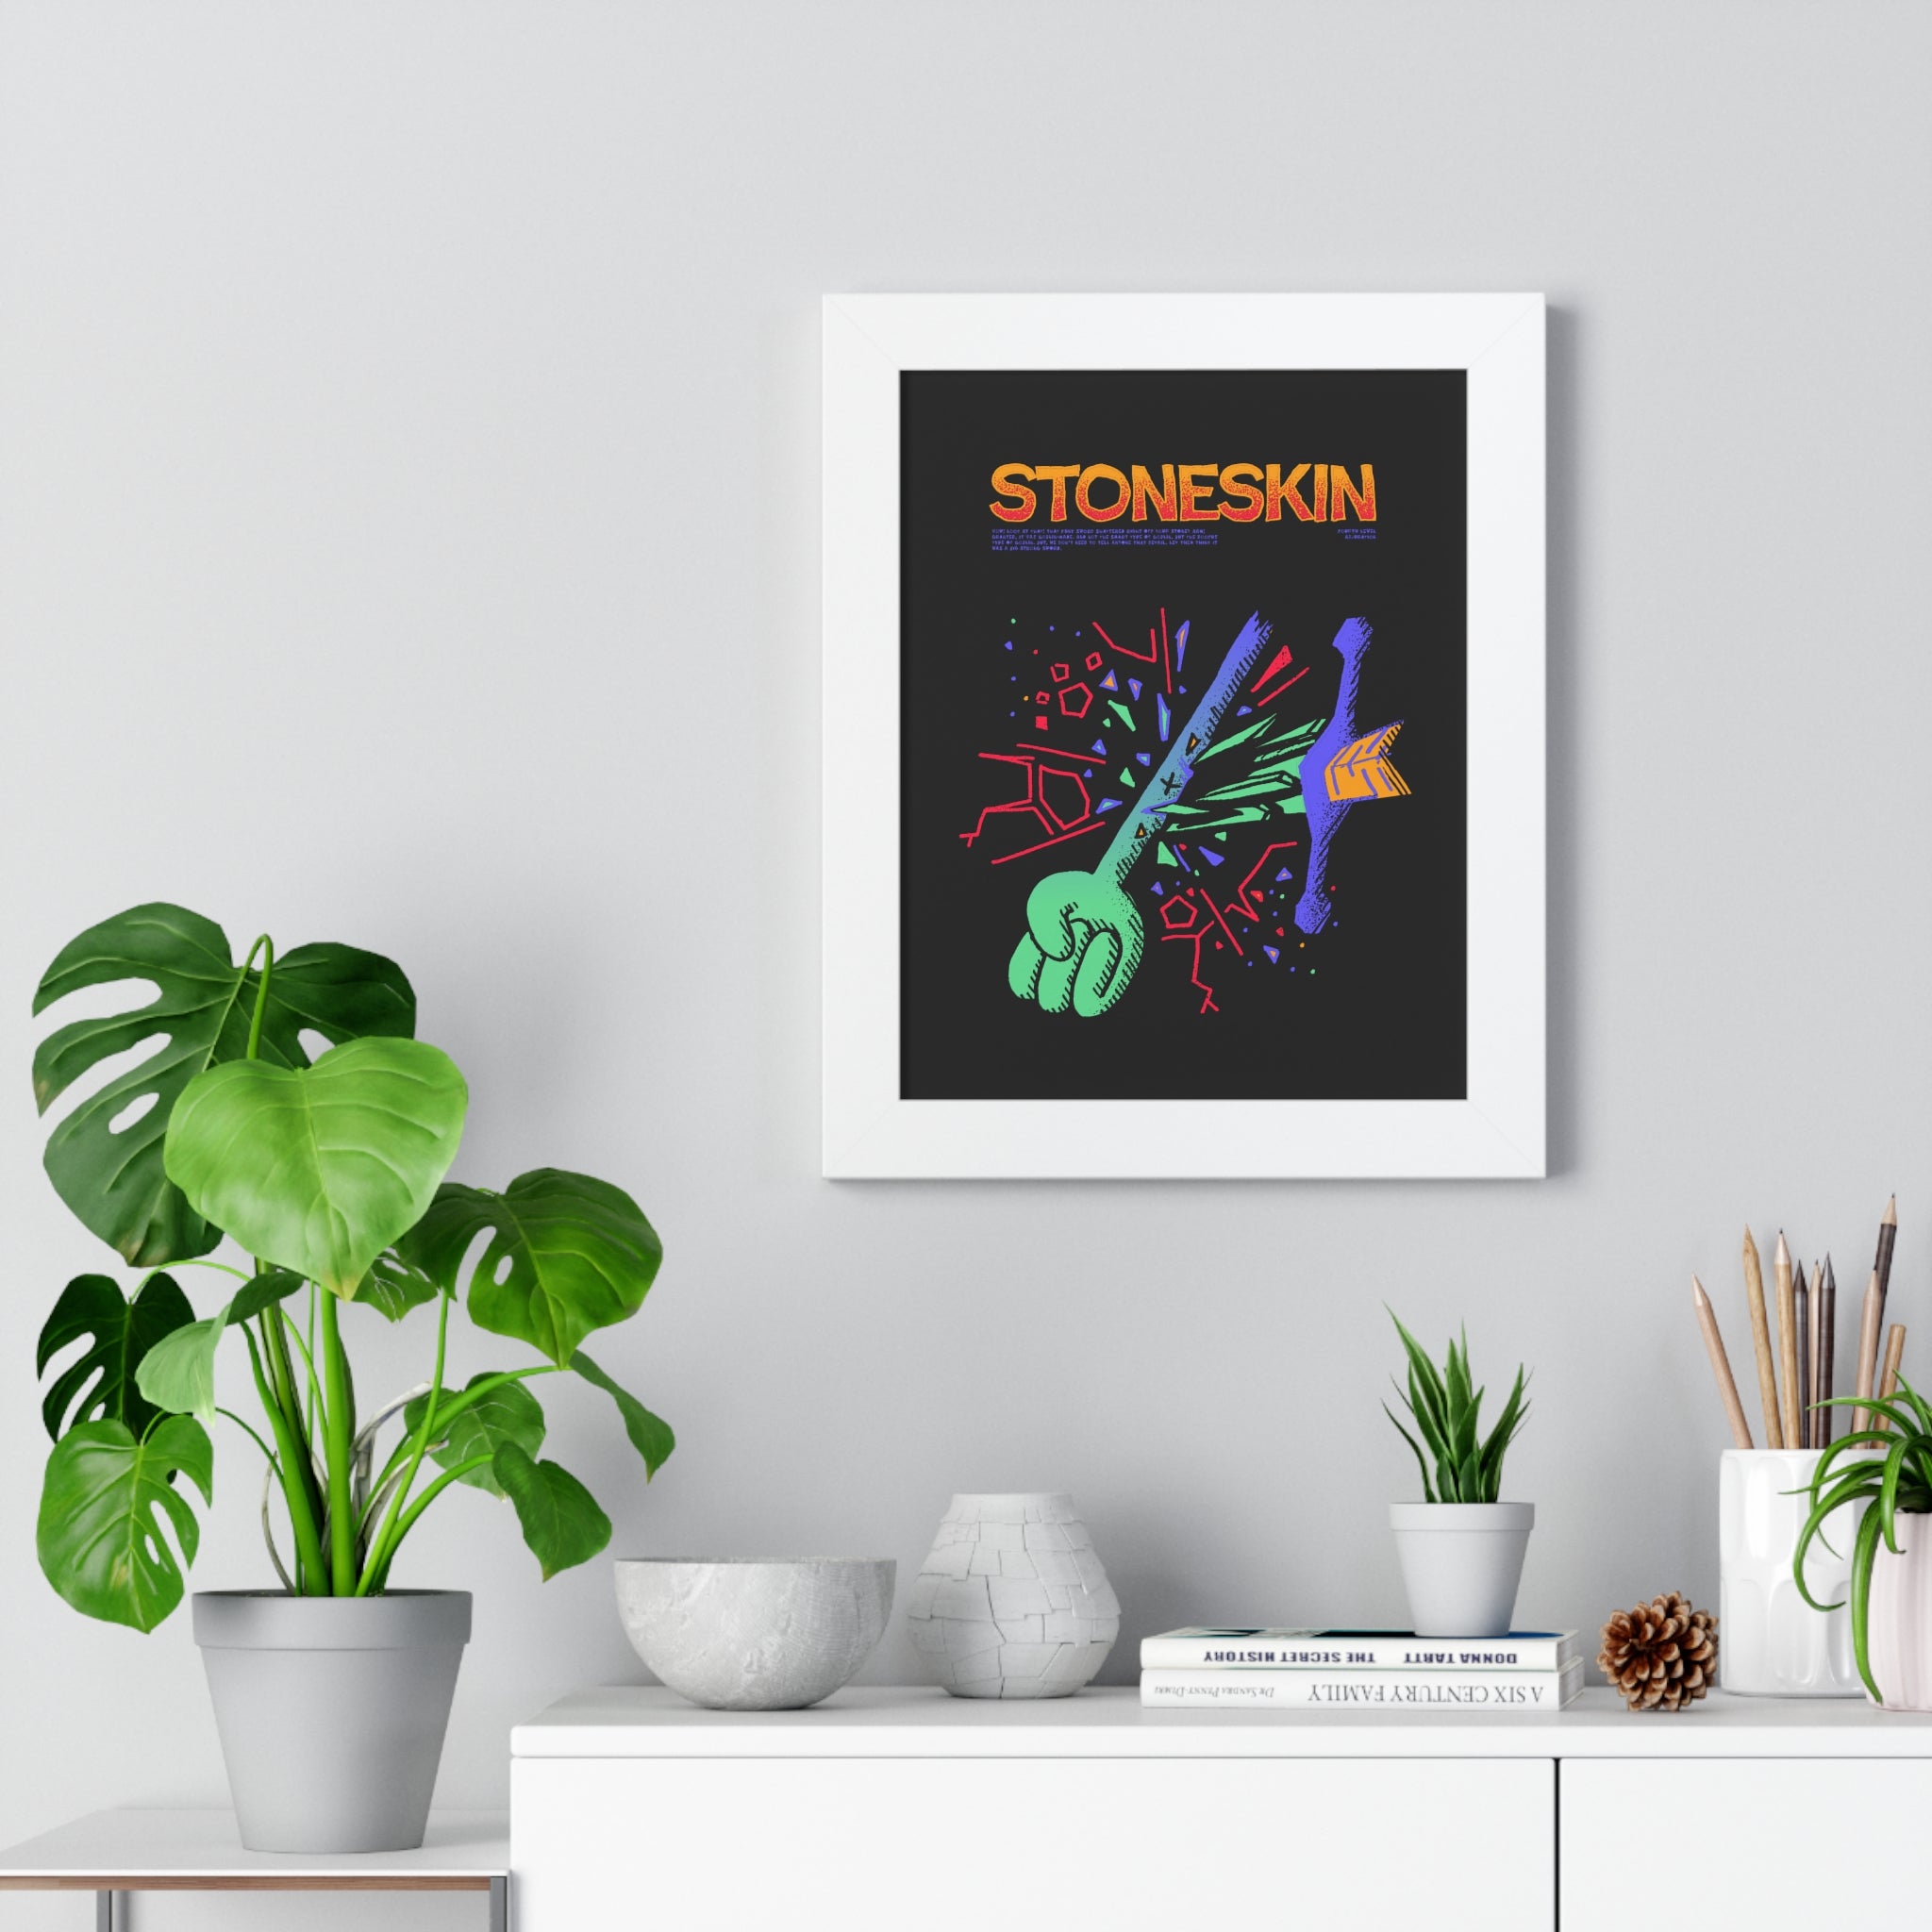 Stoneskin | Framed Poster - Framed Poster - Ace of Gnomes - 66621161064019179089